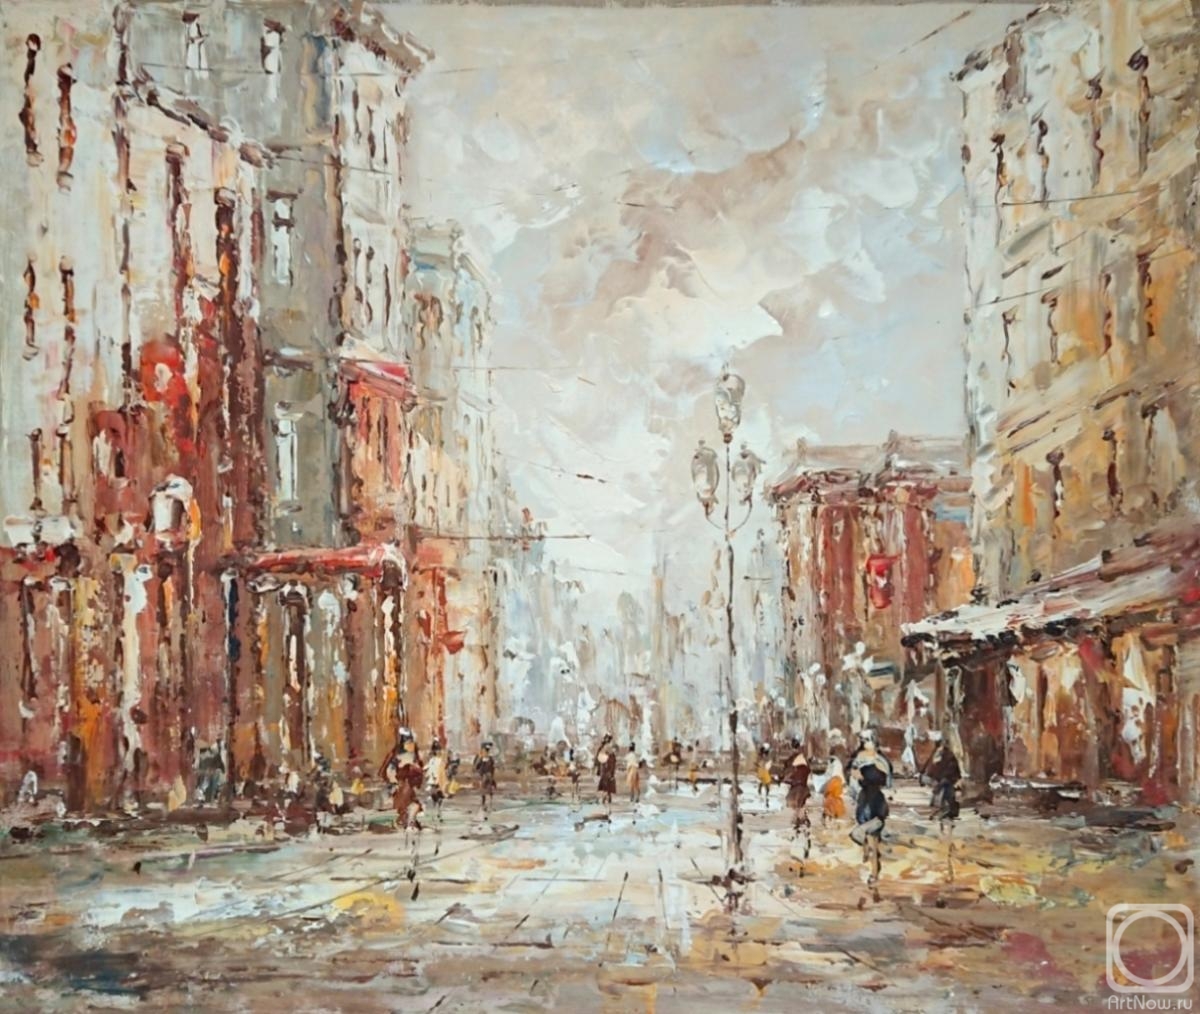 Smorodinov Ruslan. Street landscape